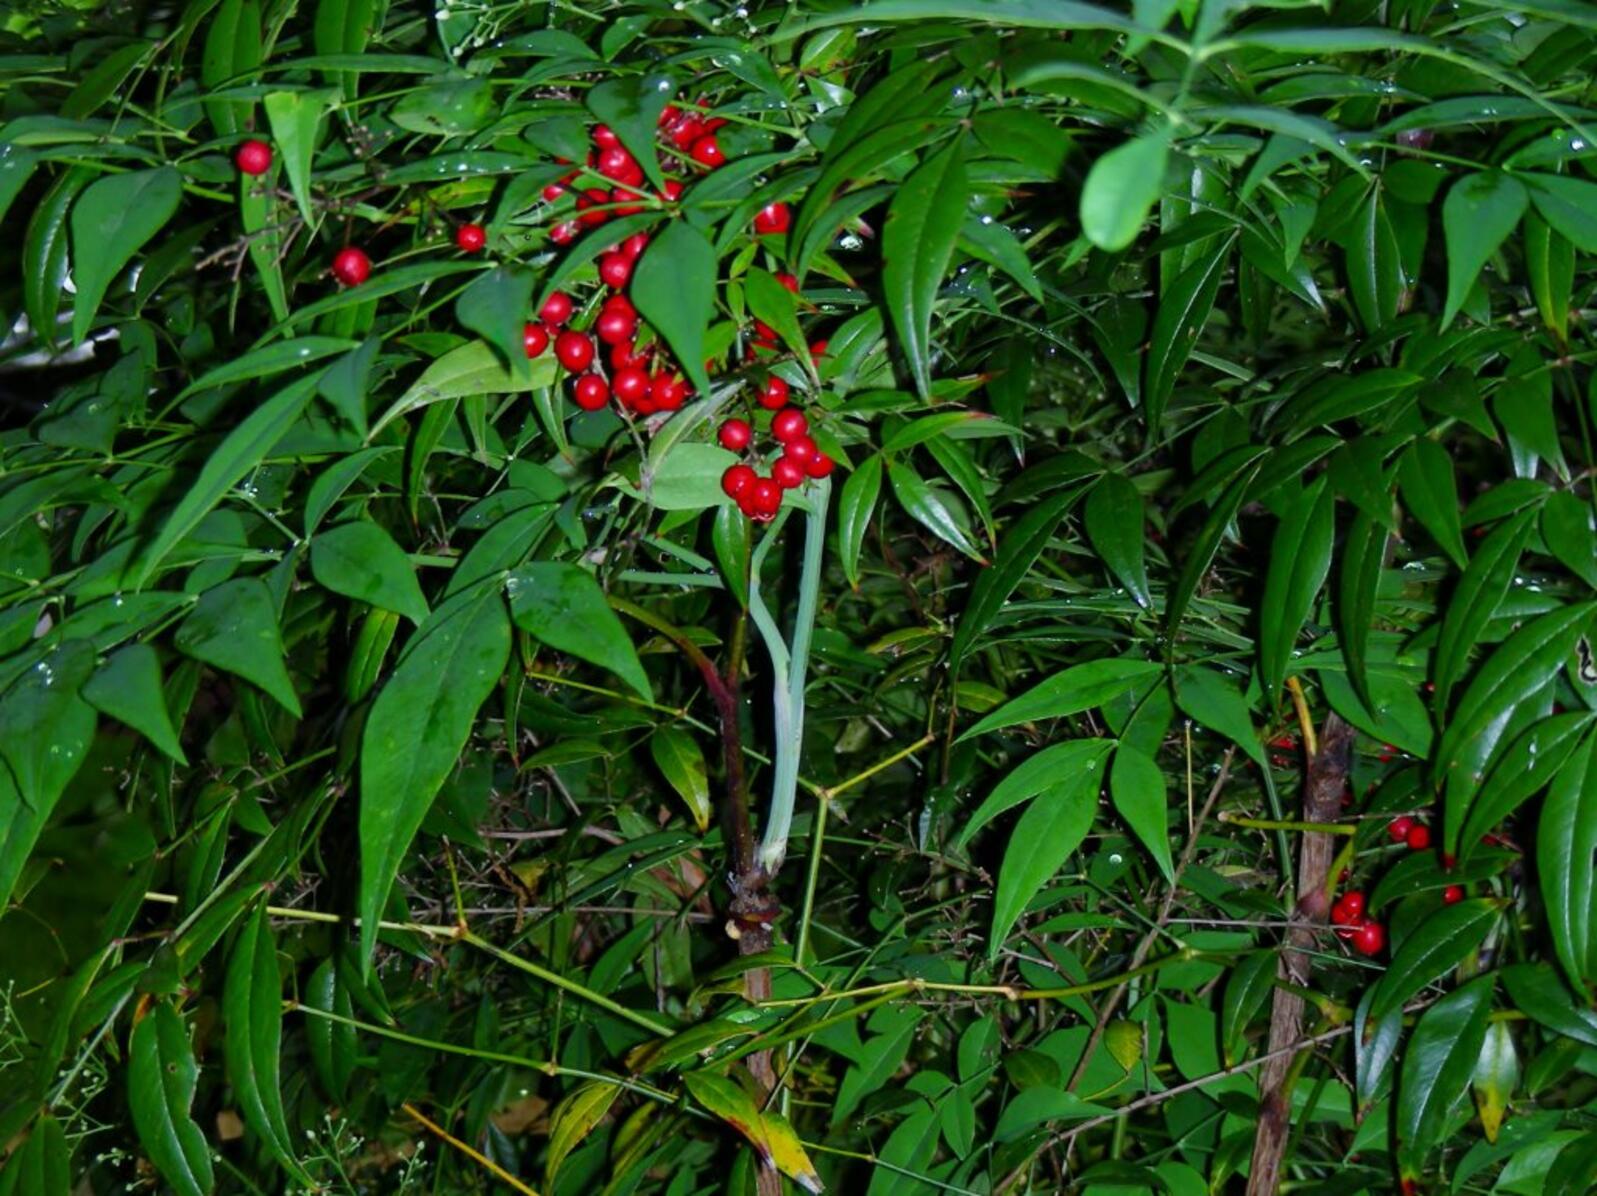 nandina berries kill birds | audubon arkansas